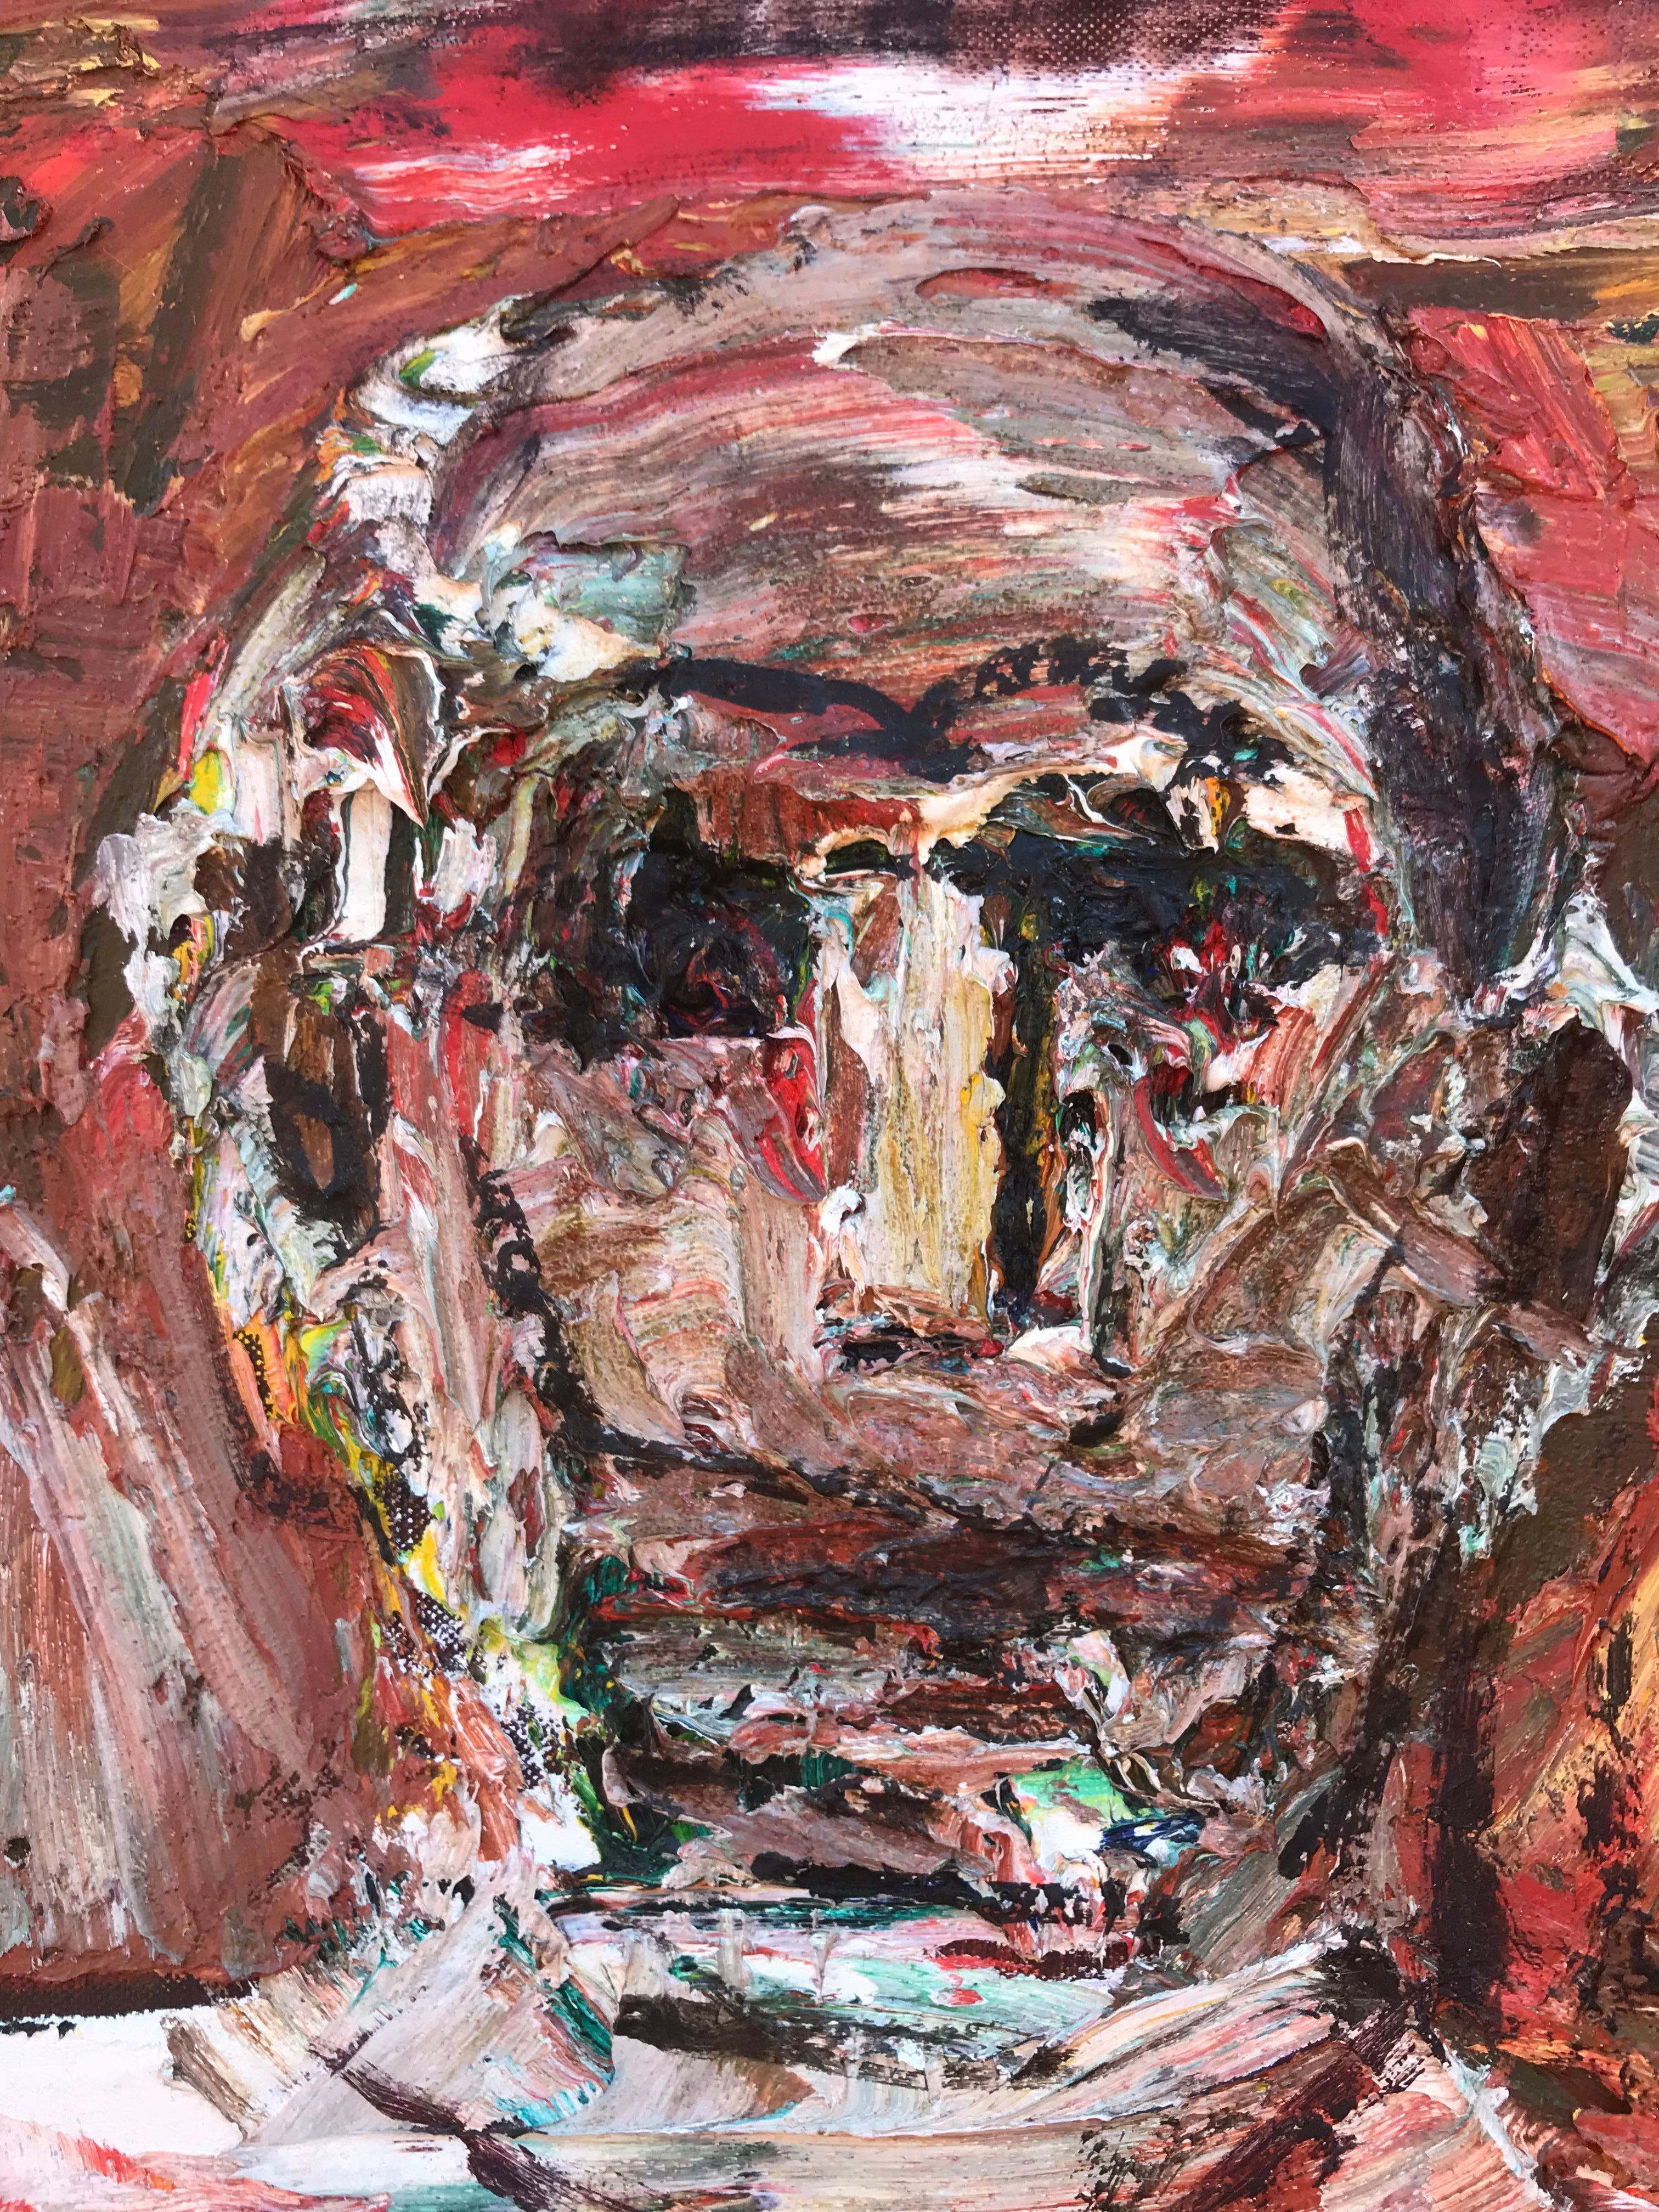 “Artist Self Portrait” - Painting by Nahum Tschacbasov